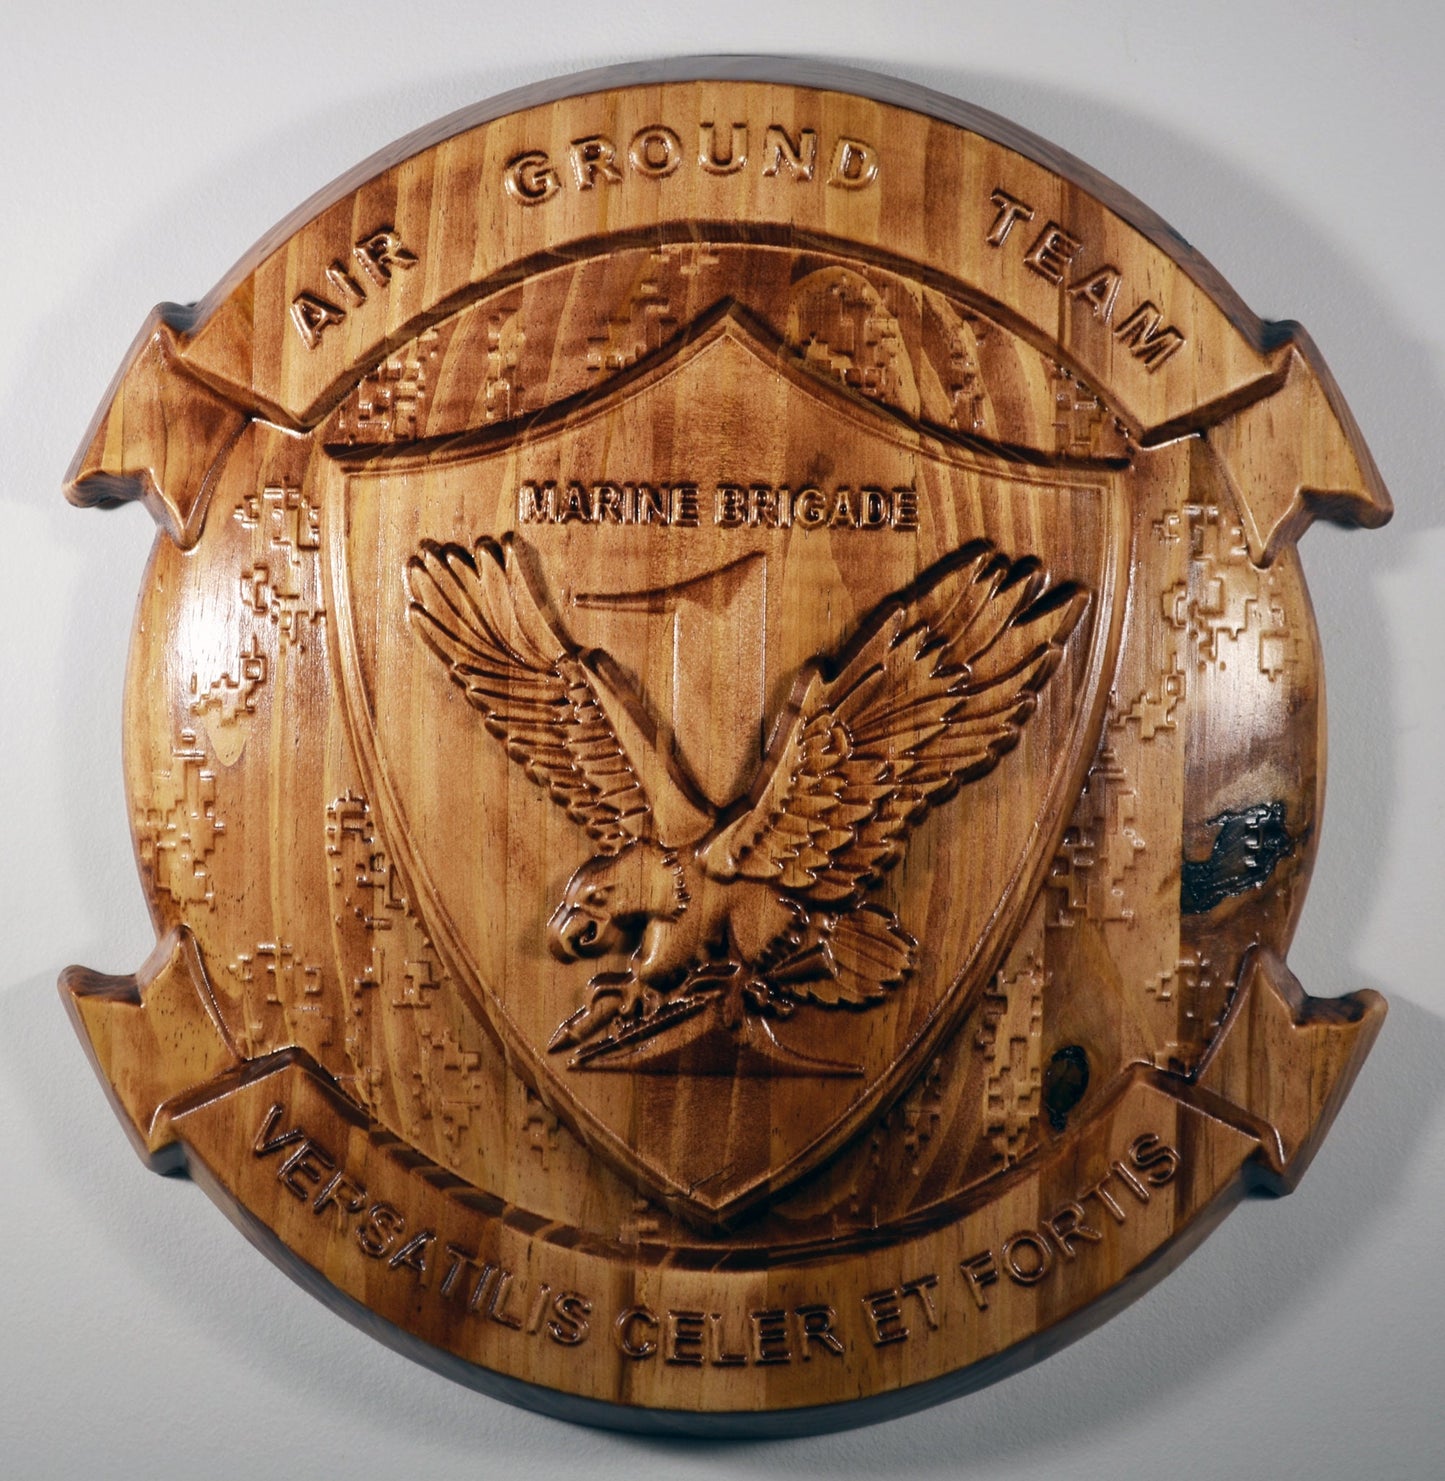 USMC 1st Marine Expeditionary Brigade (1st MEB), CNC 3d wood carving, military plaque